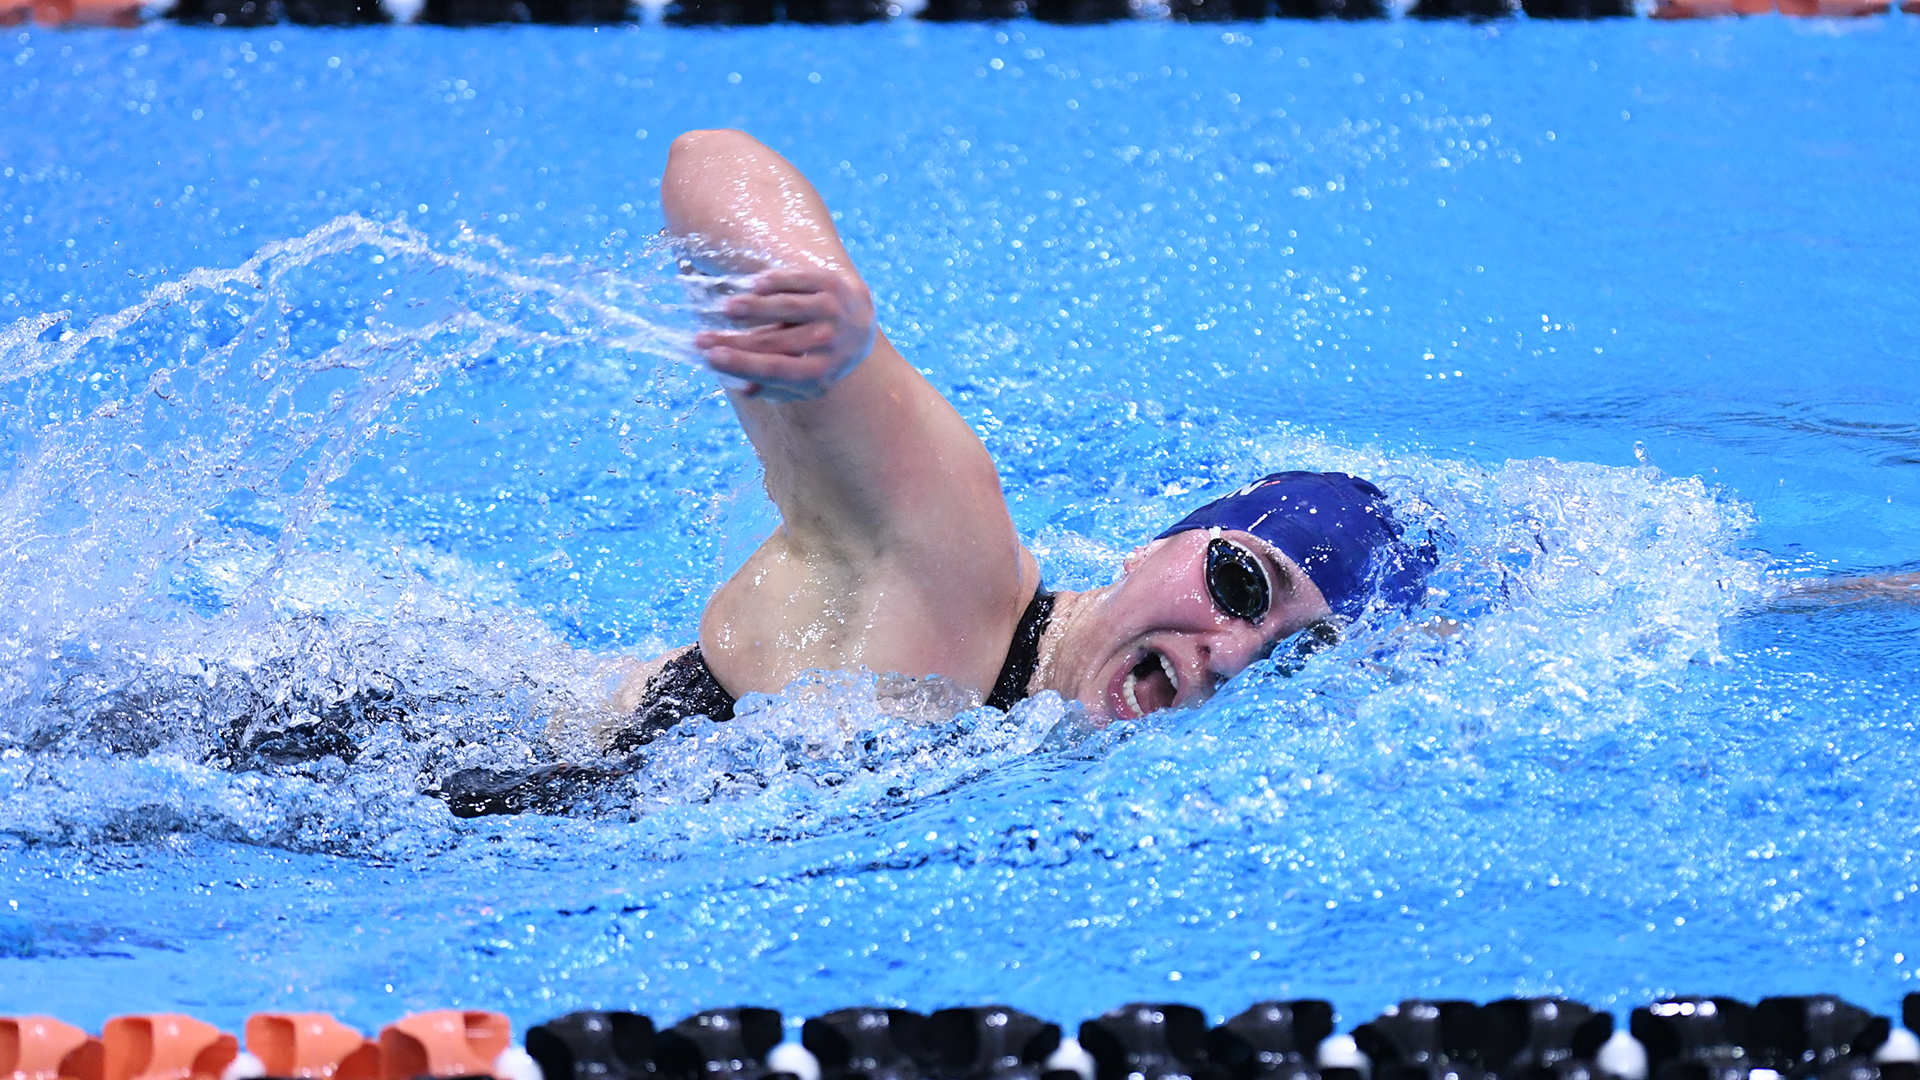 Anna Kalandadze takes a breath while swimming during a meet.